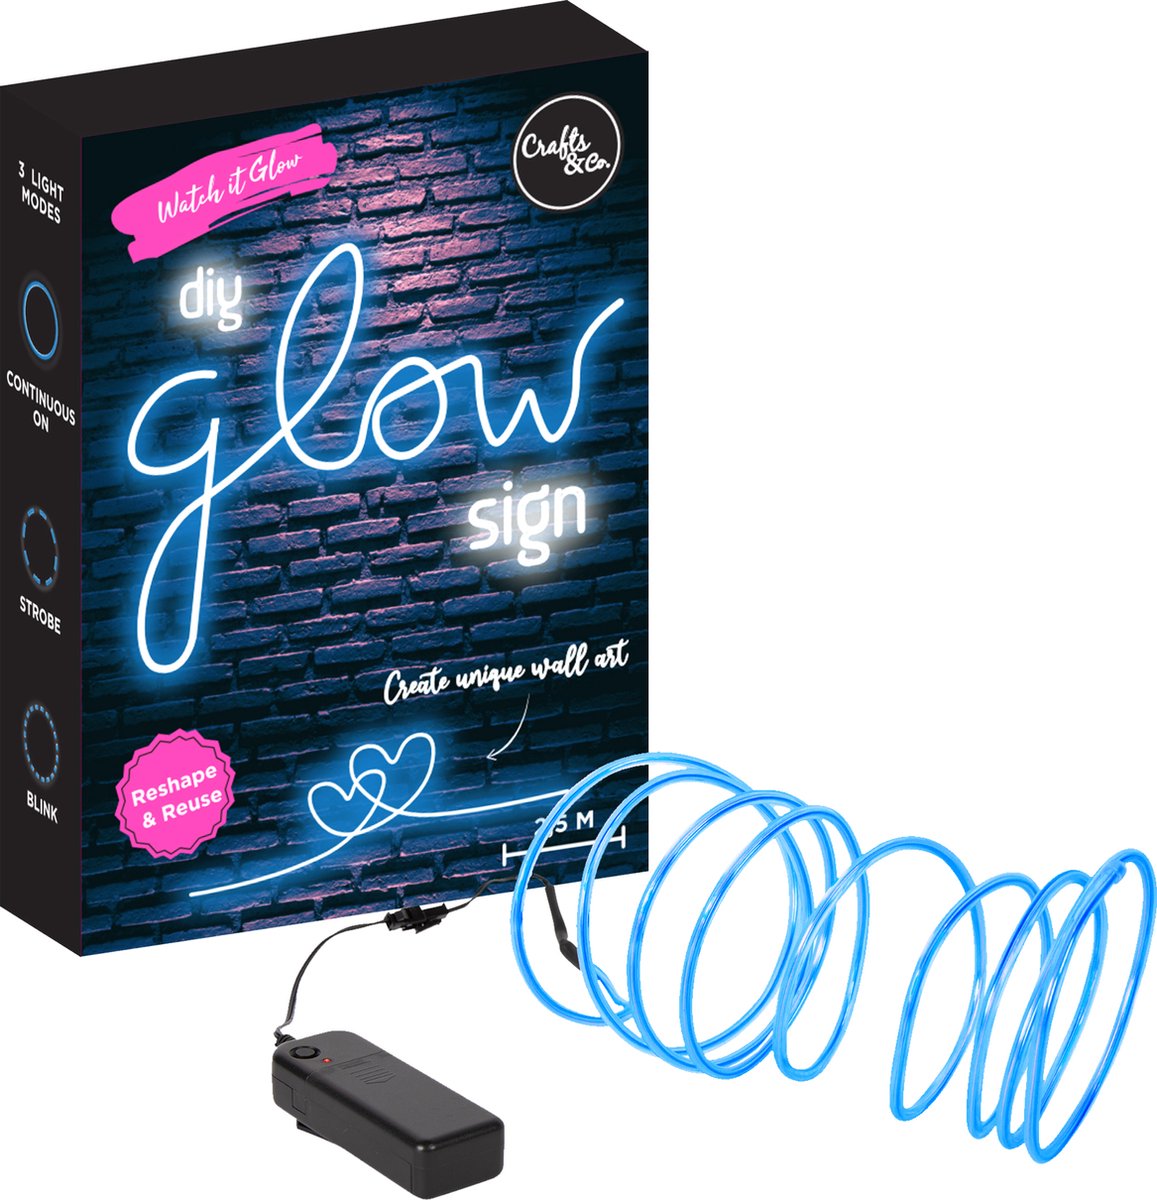 Crafts&Co DIY LED Neon Sign Kit - 250 cm - Blauw